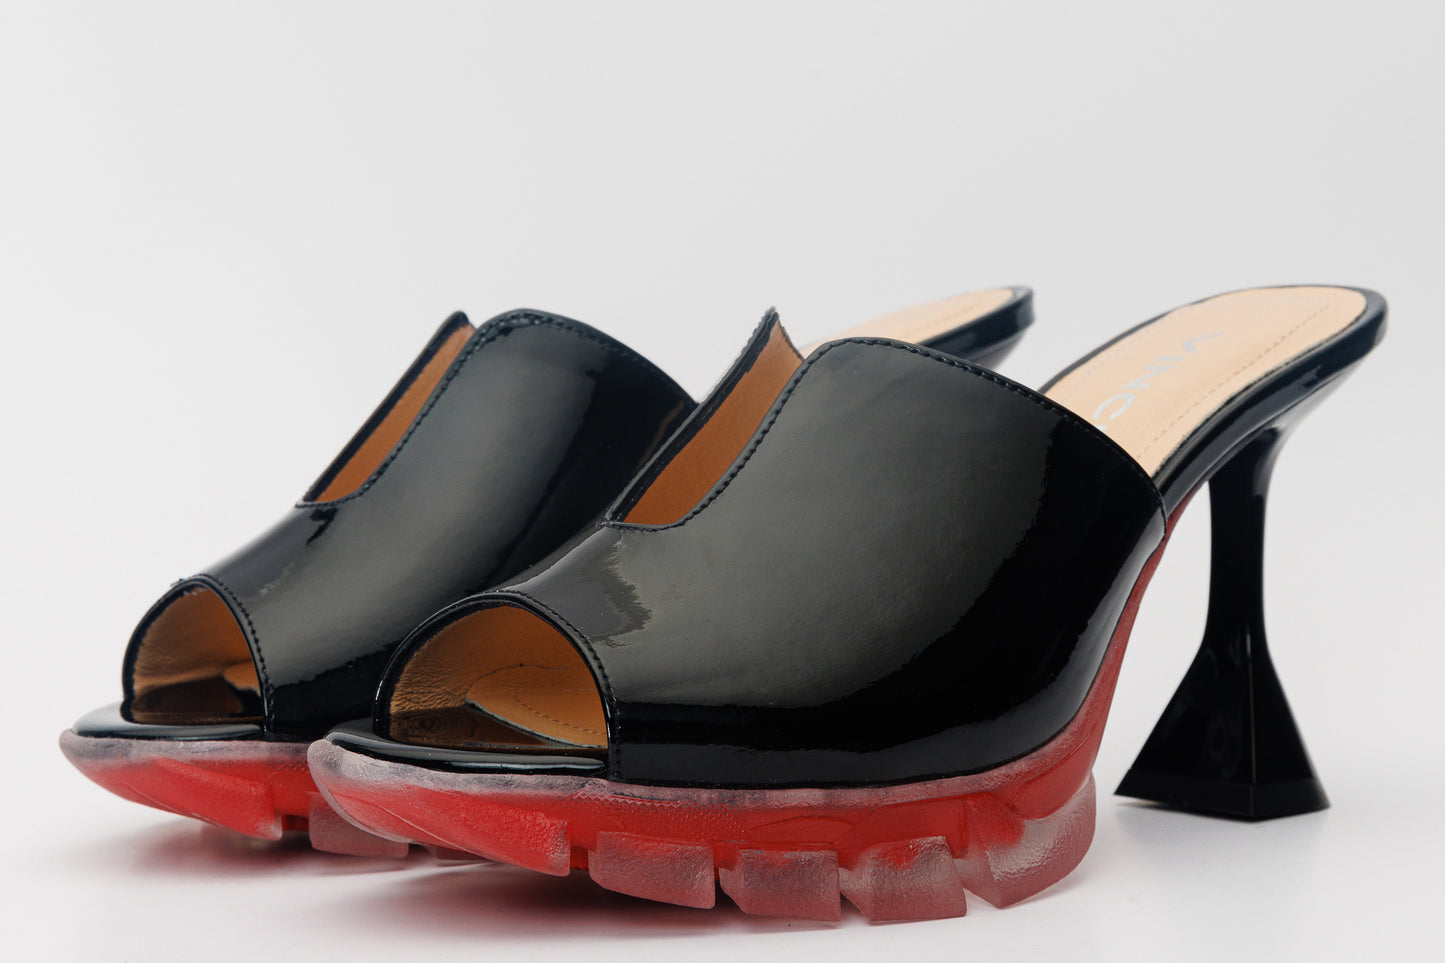 The Caratal Black Patent Leather Women Sandal